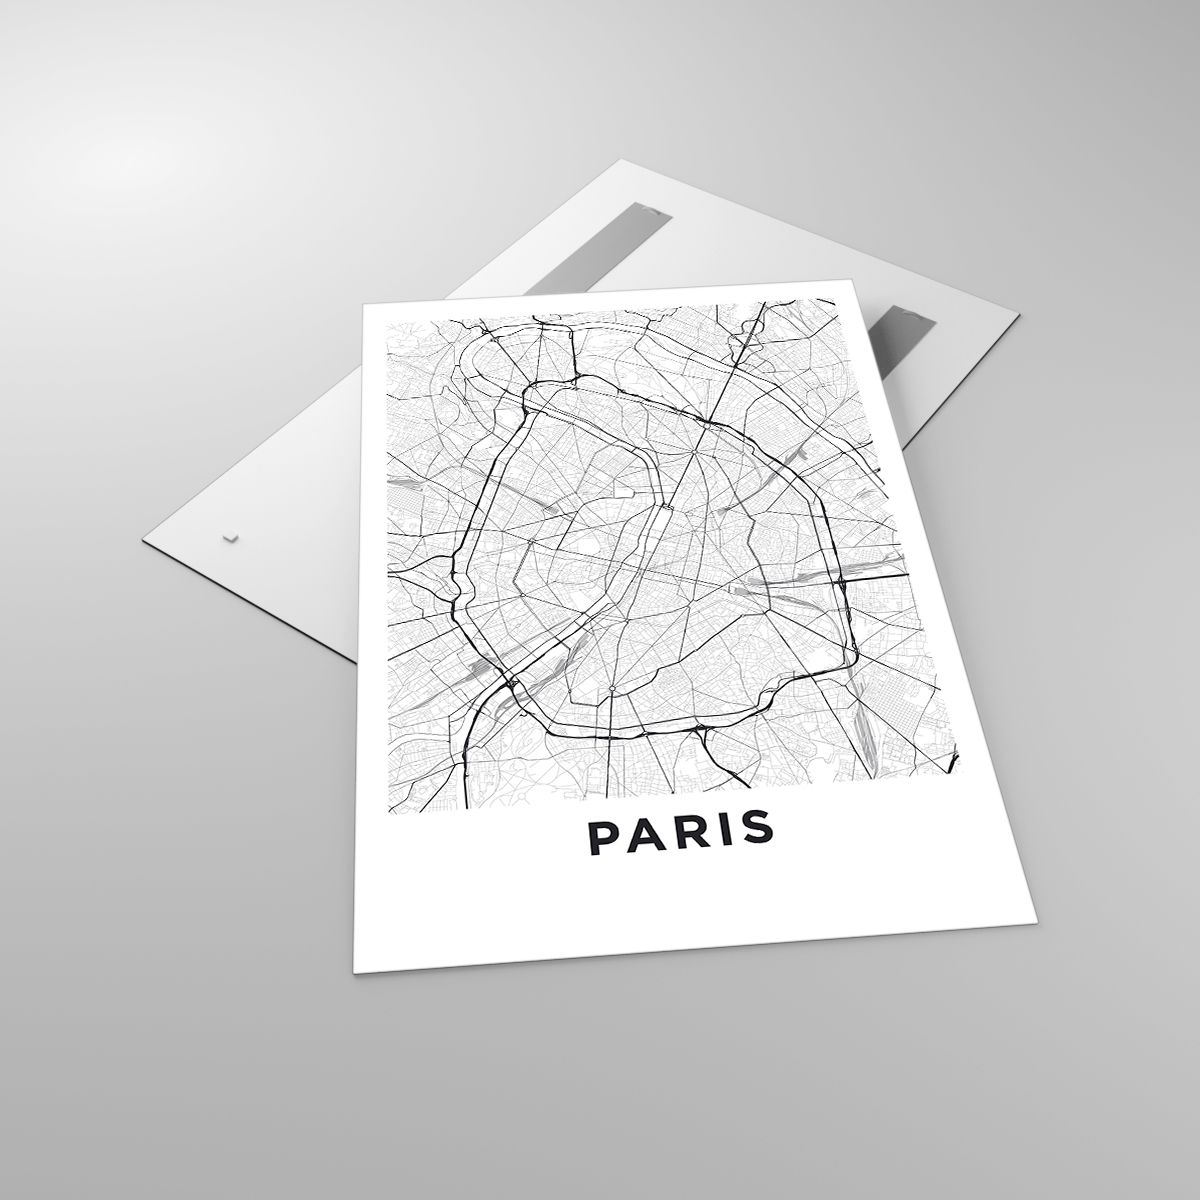 Bild på glas Stad, Bild på glas Stadskarta, Bild på glas Paris, Bild på glas Grafik, Bild på glas Frankrike